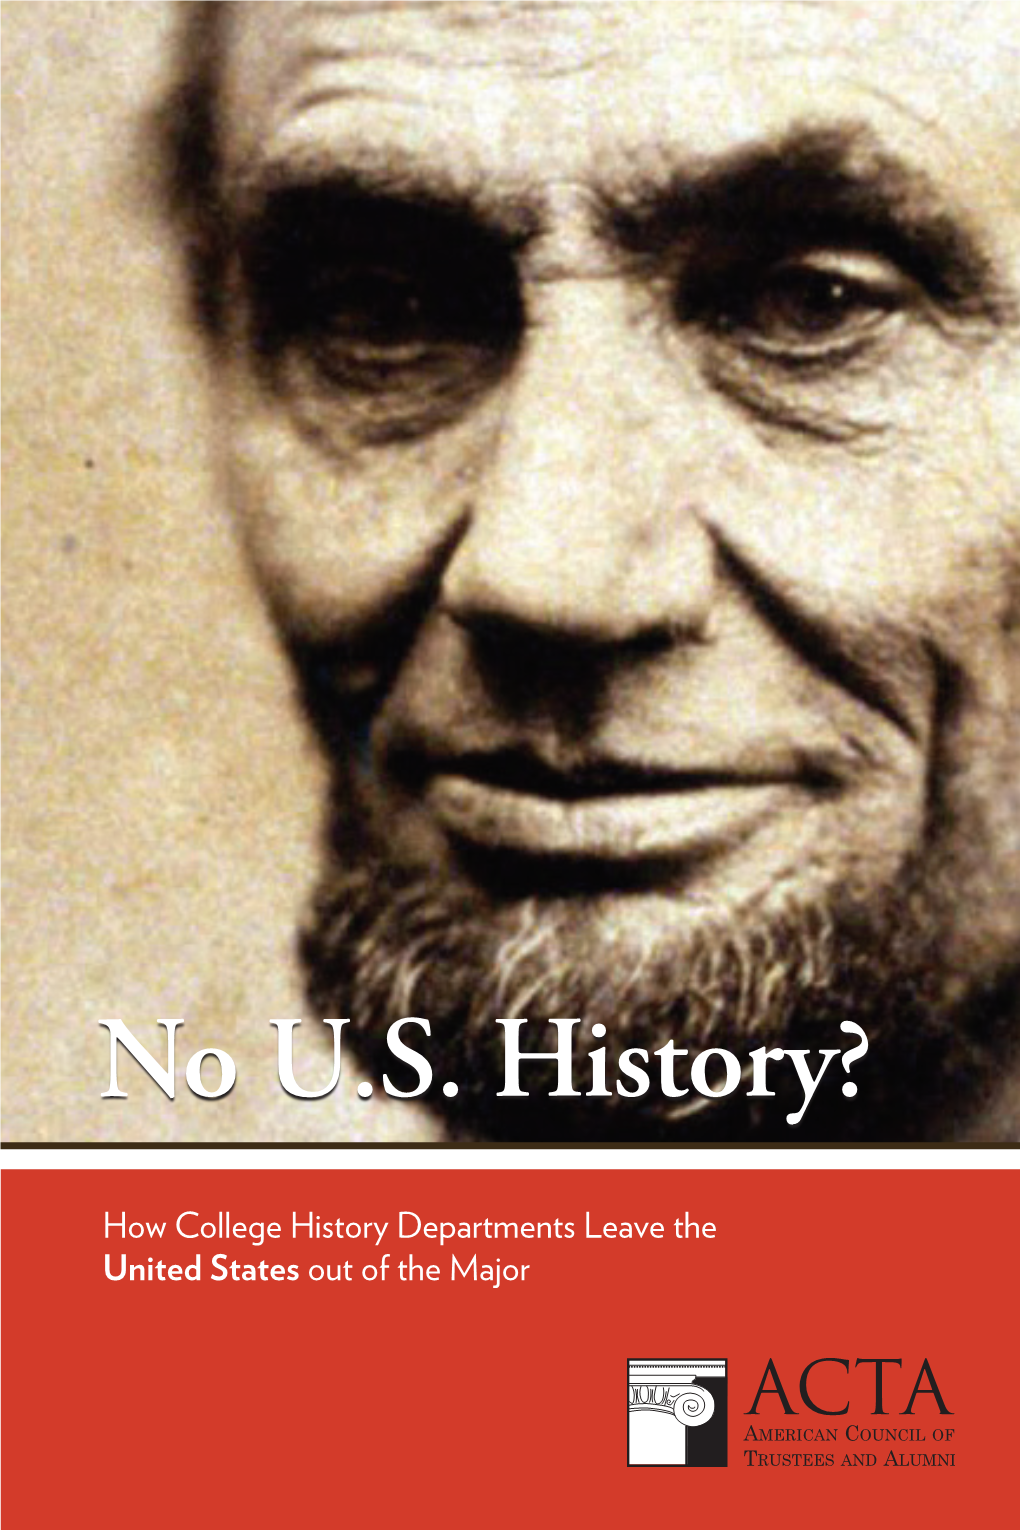 No U.S. History?